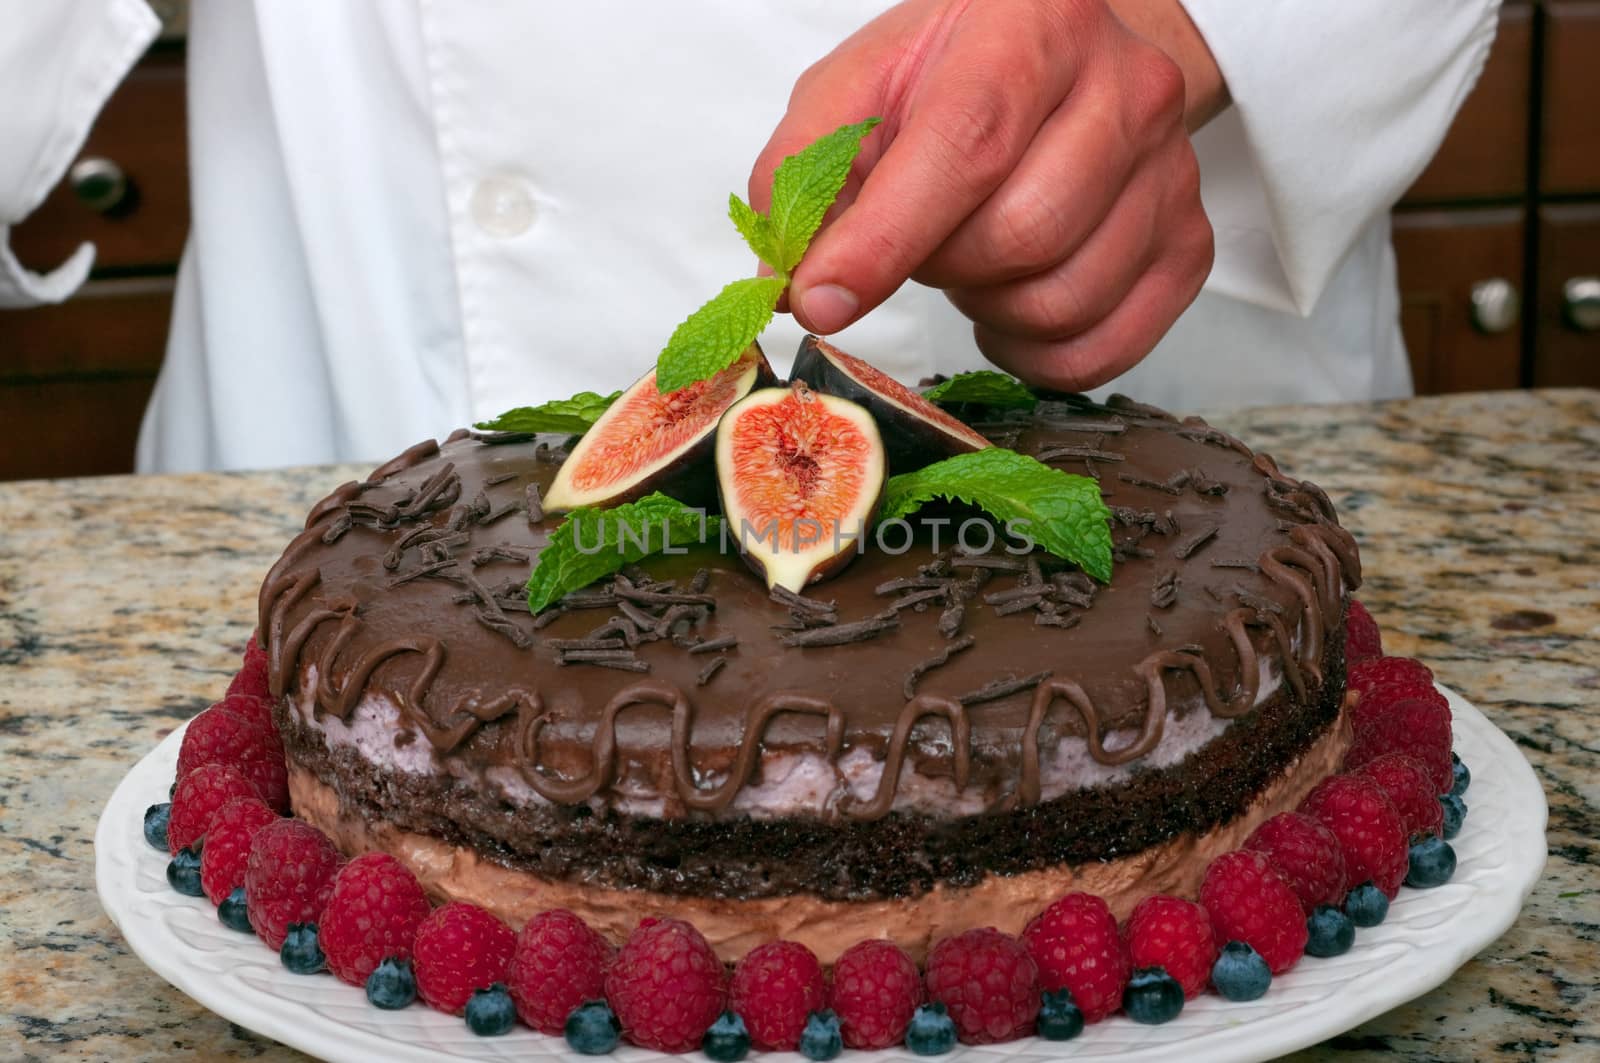 Mousse cake decorated beautifully